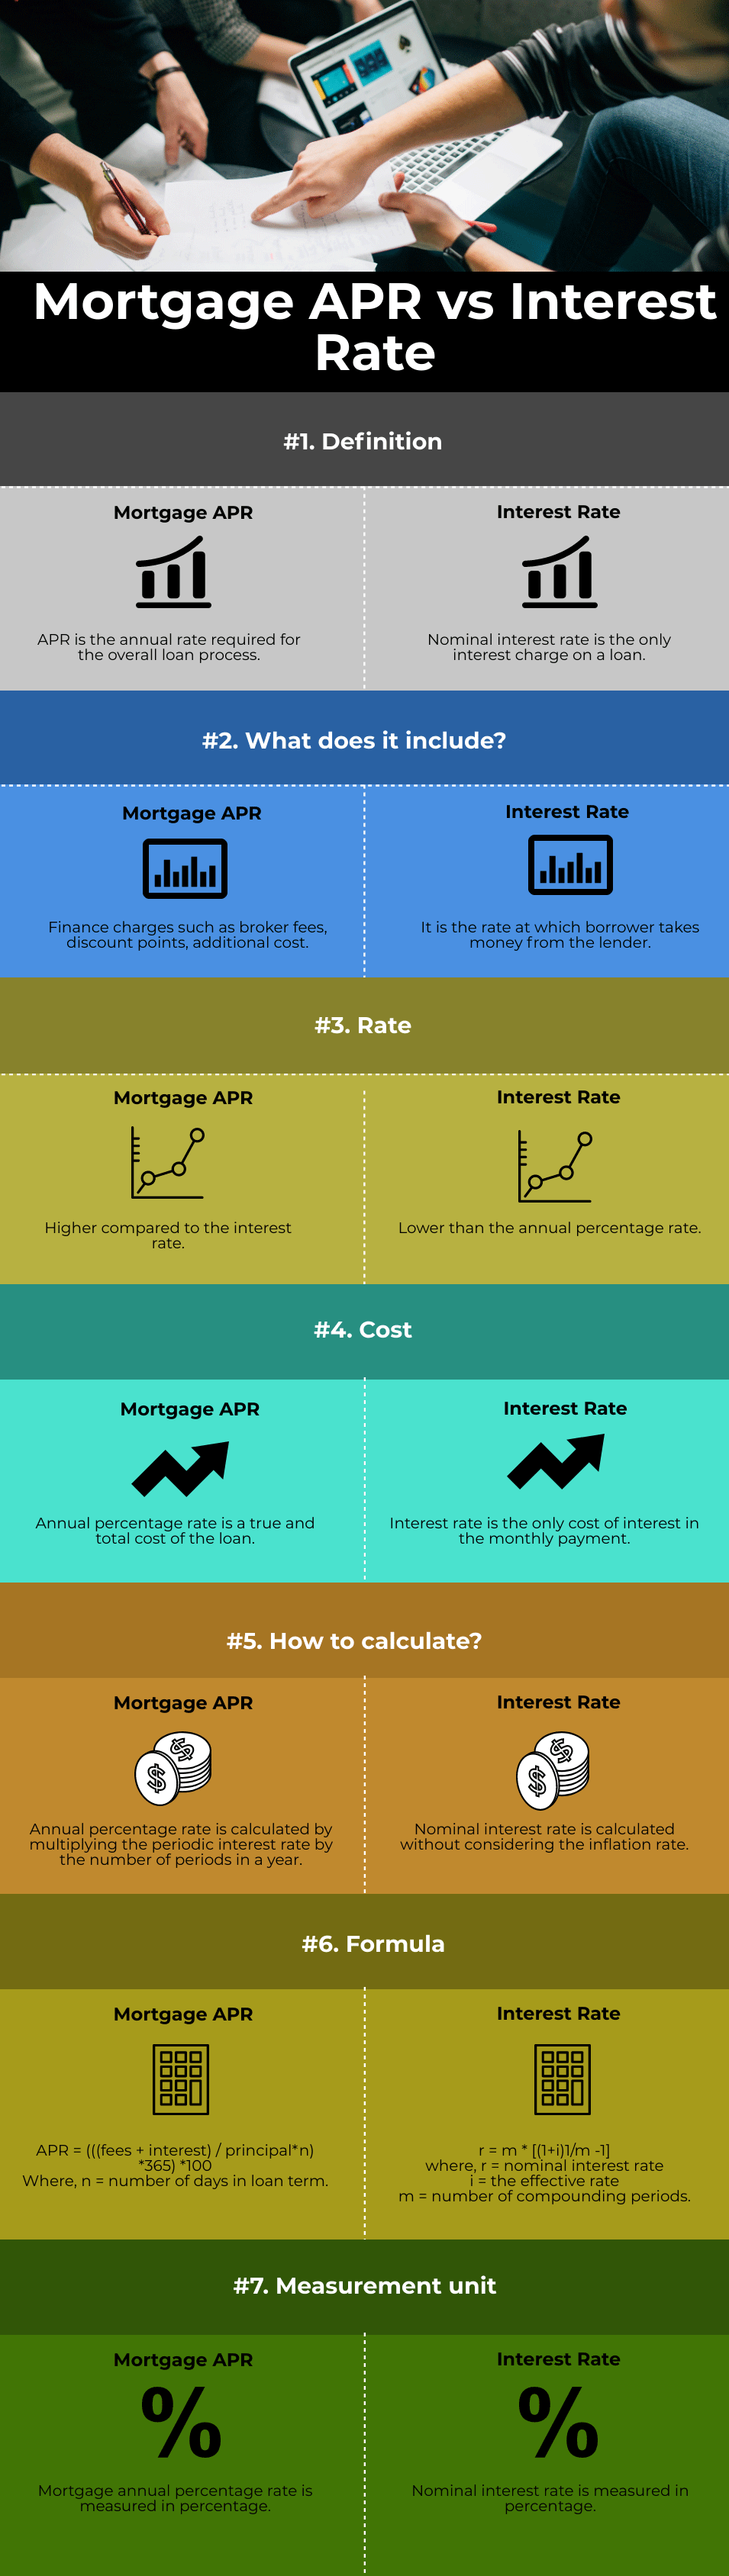 Mortgage APR vs Interest Rate